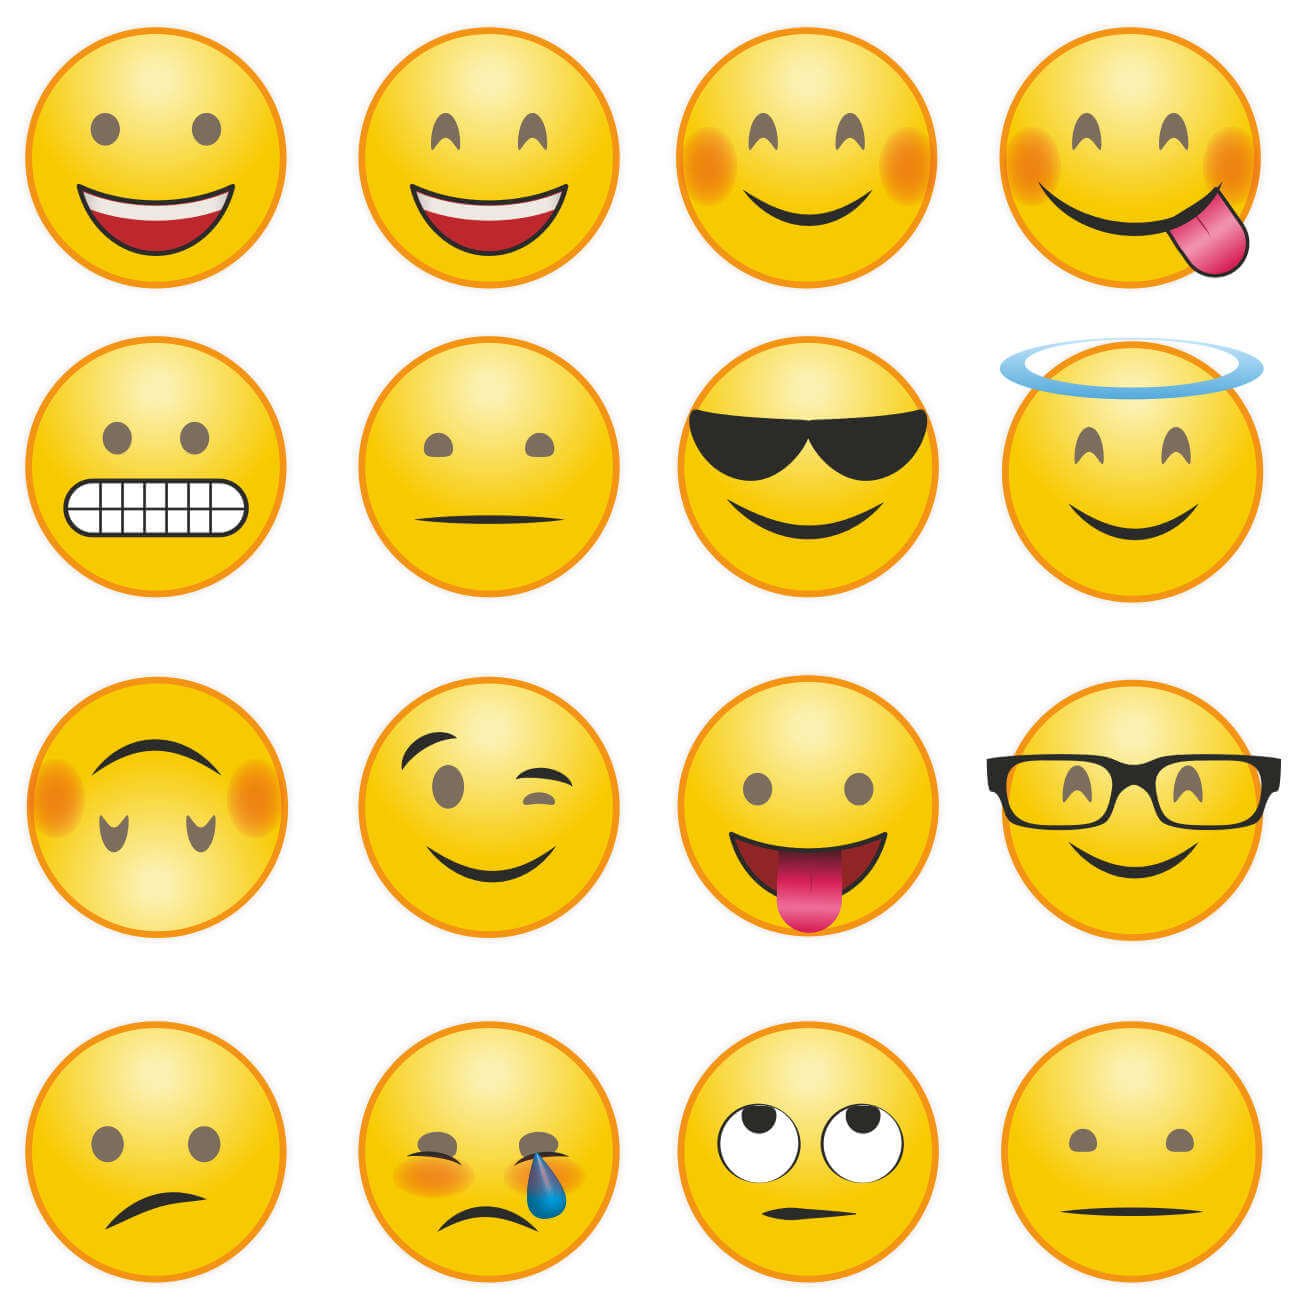 pc name emojis internet issues